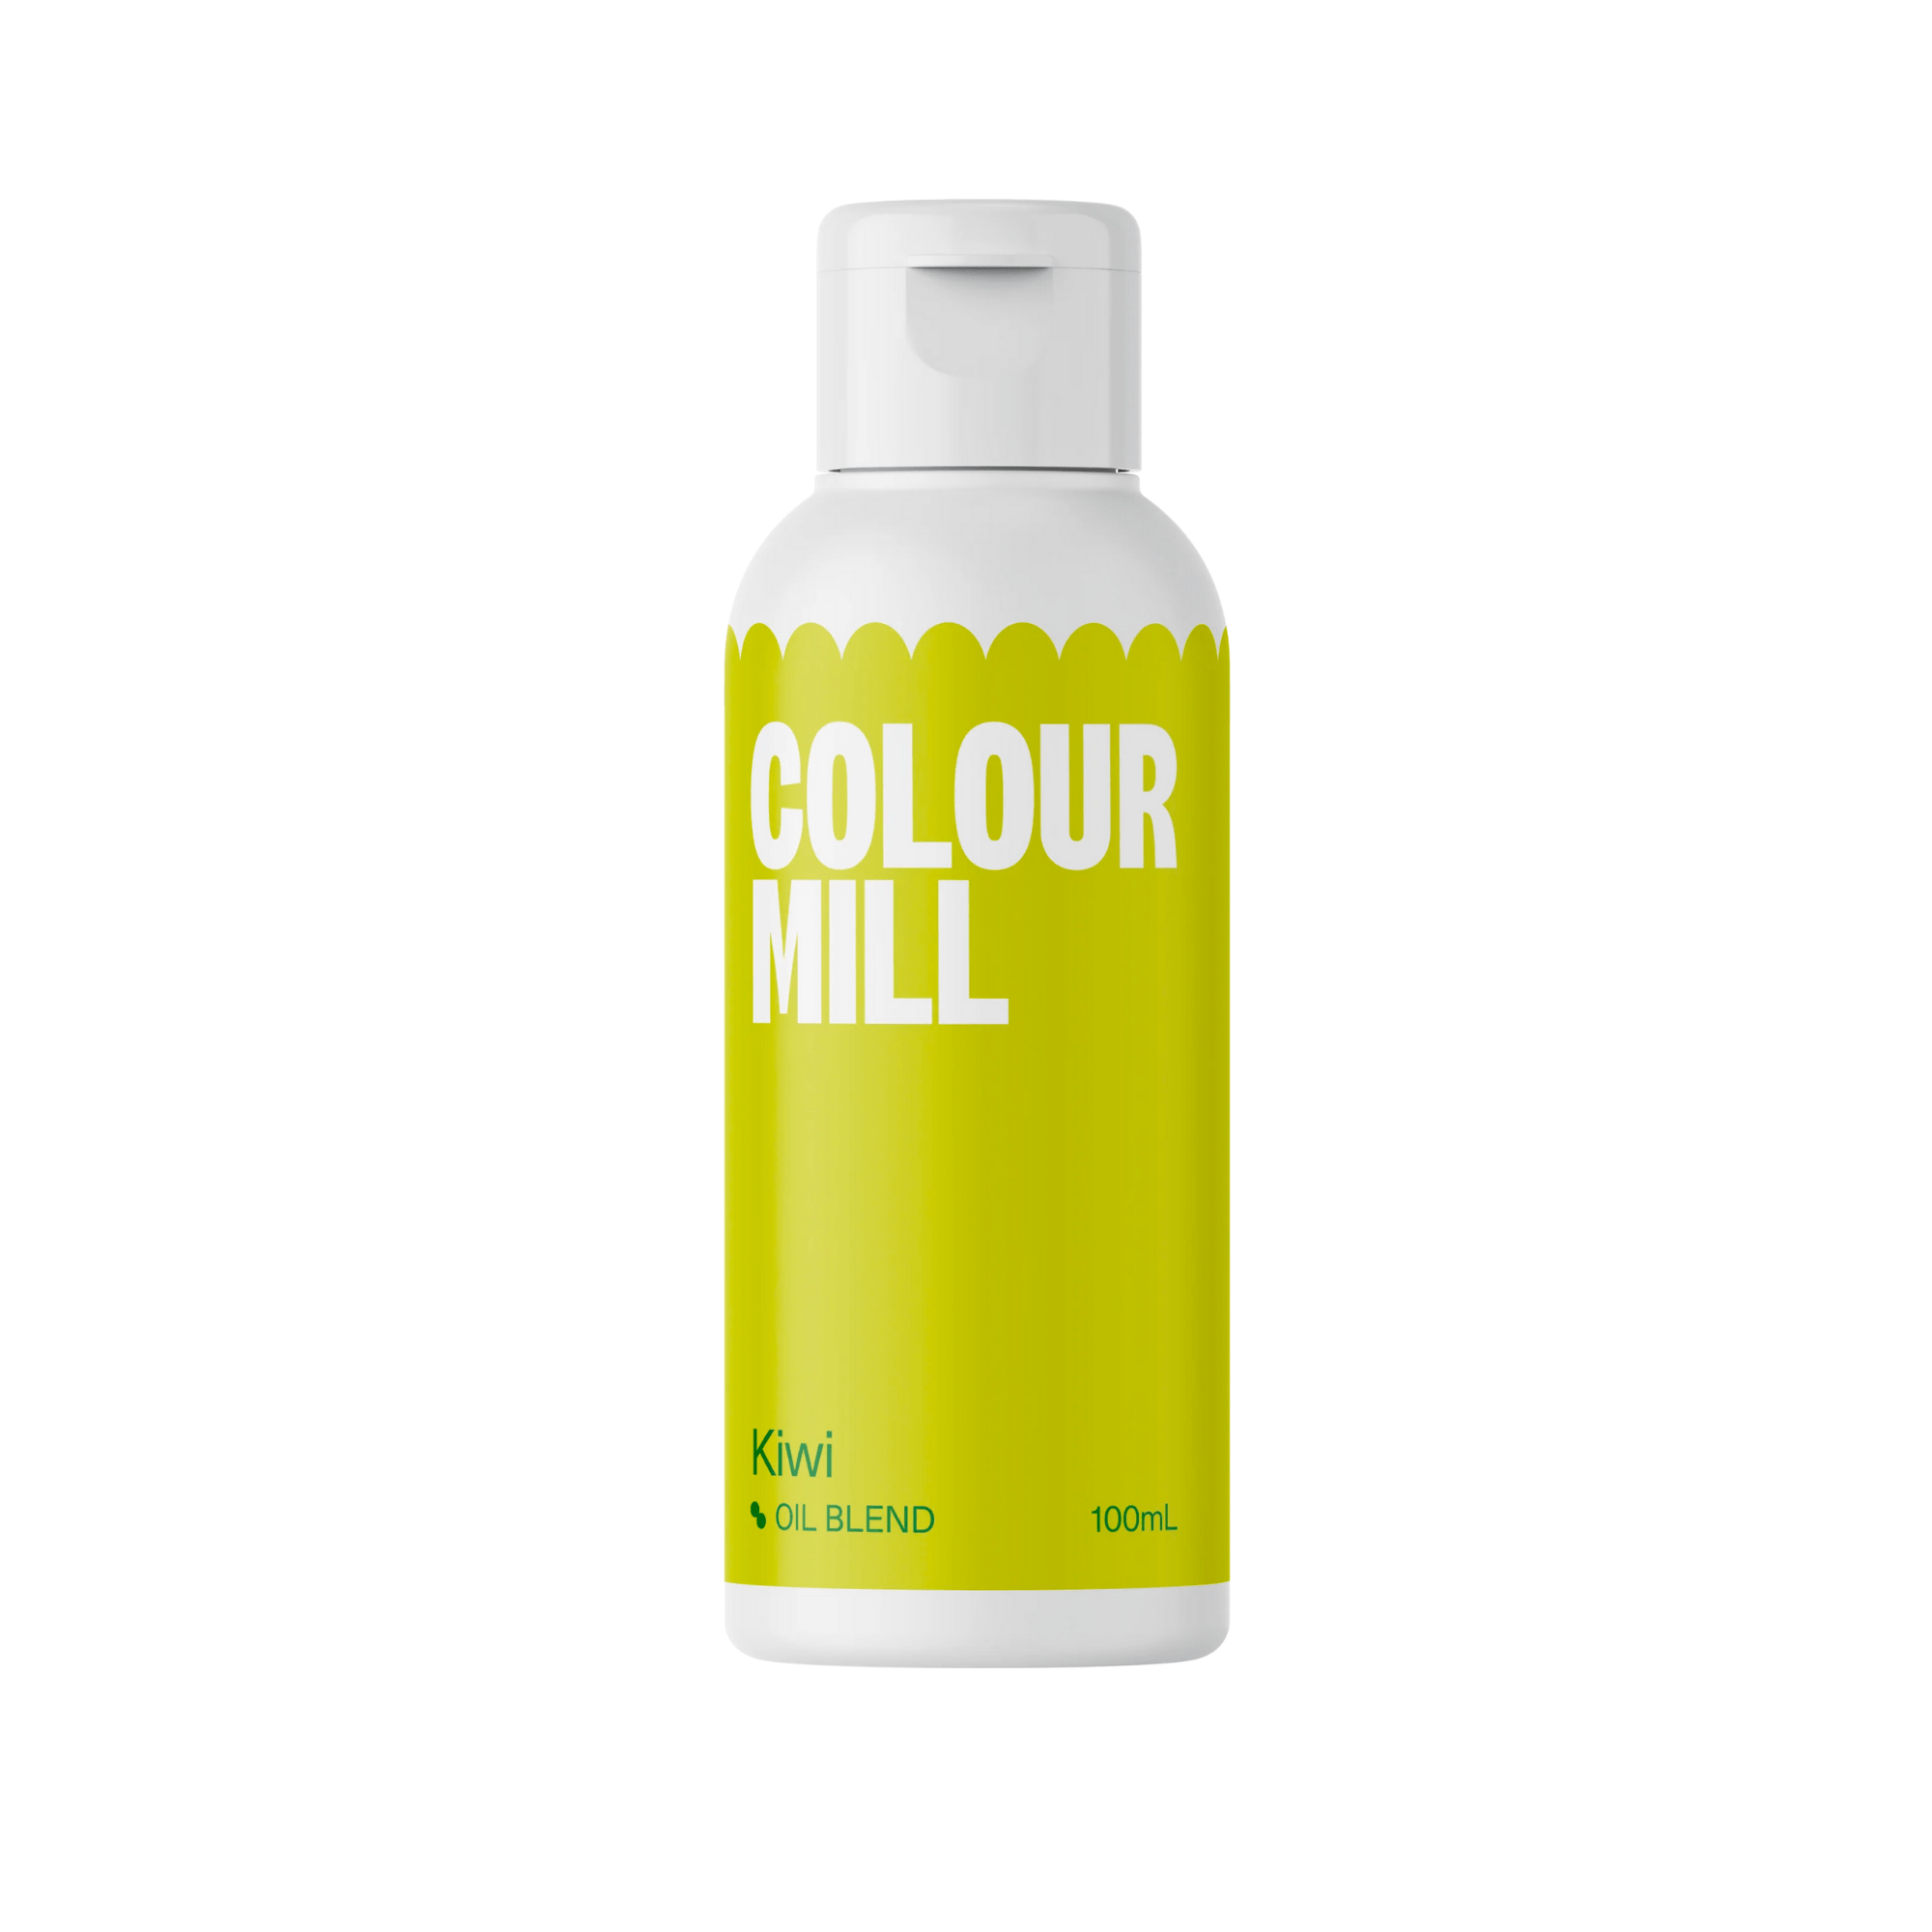 Happy Sprinkles Streusel 100ml Colour Mill Kiwi - Oil Blend